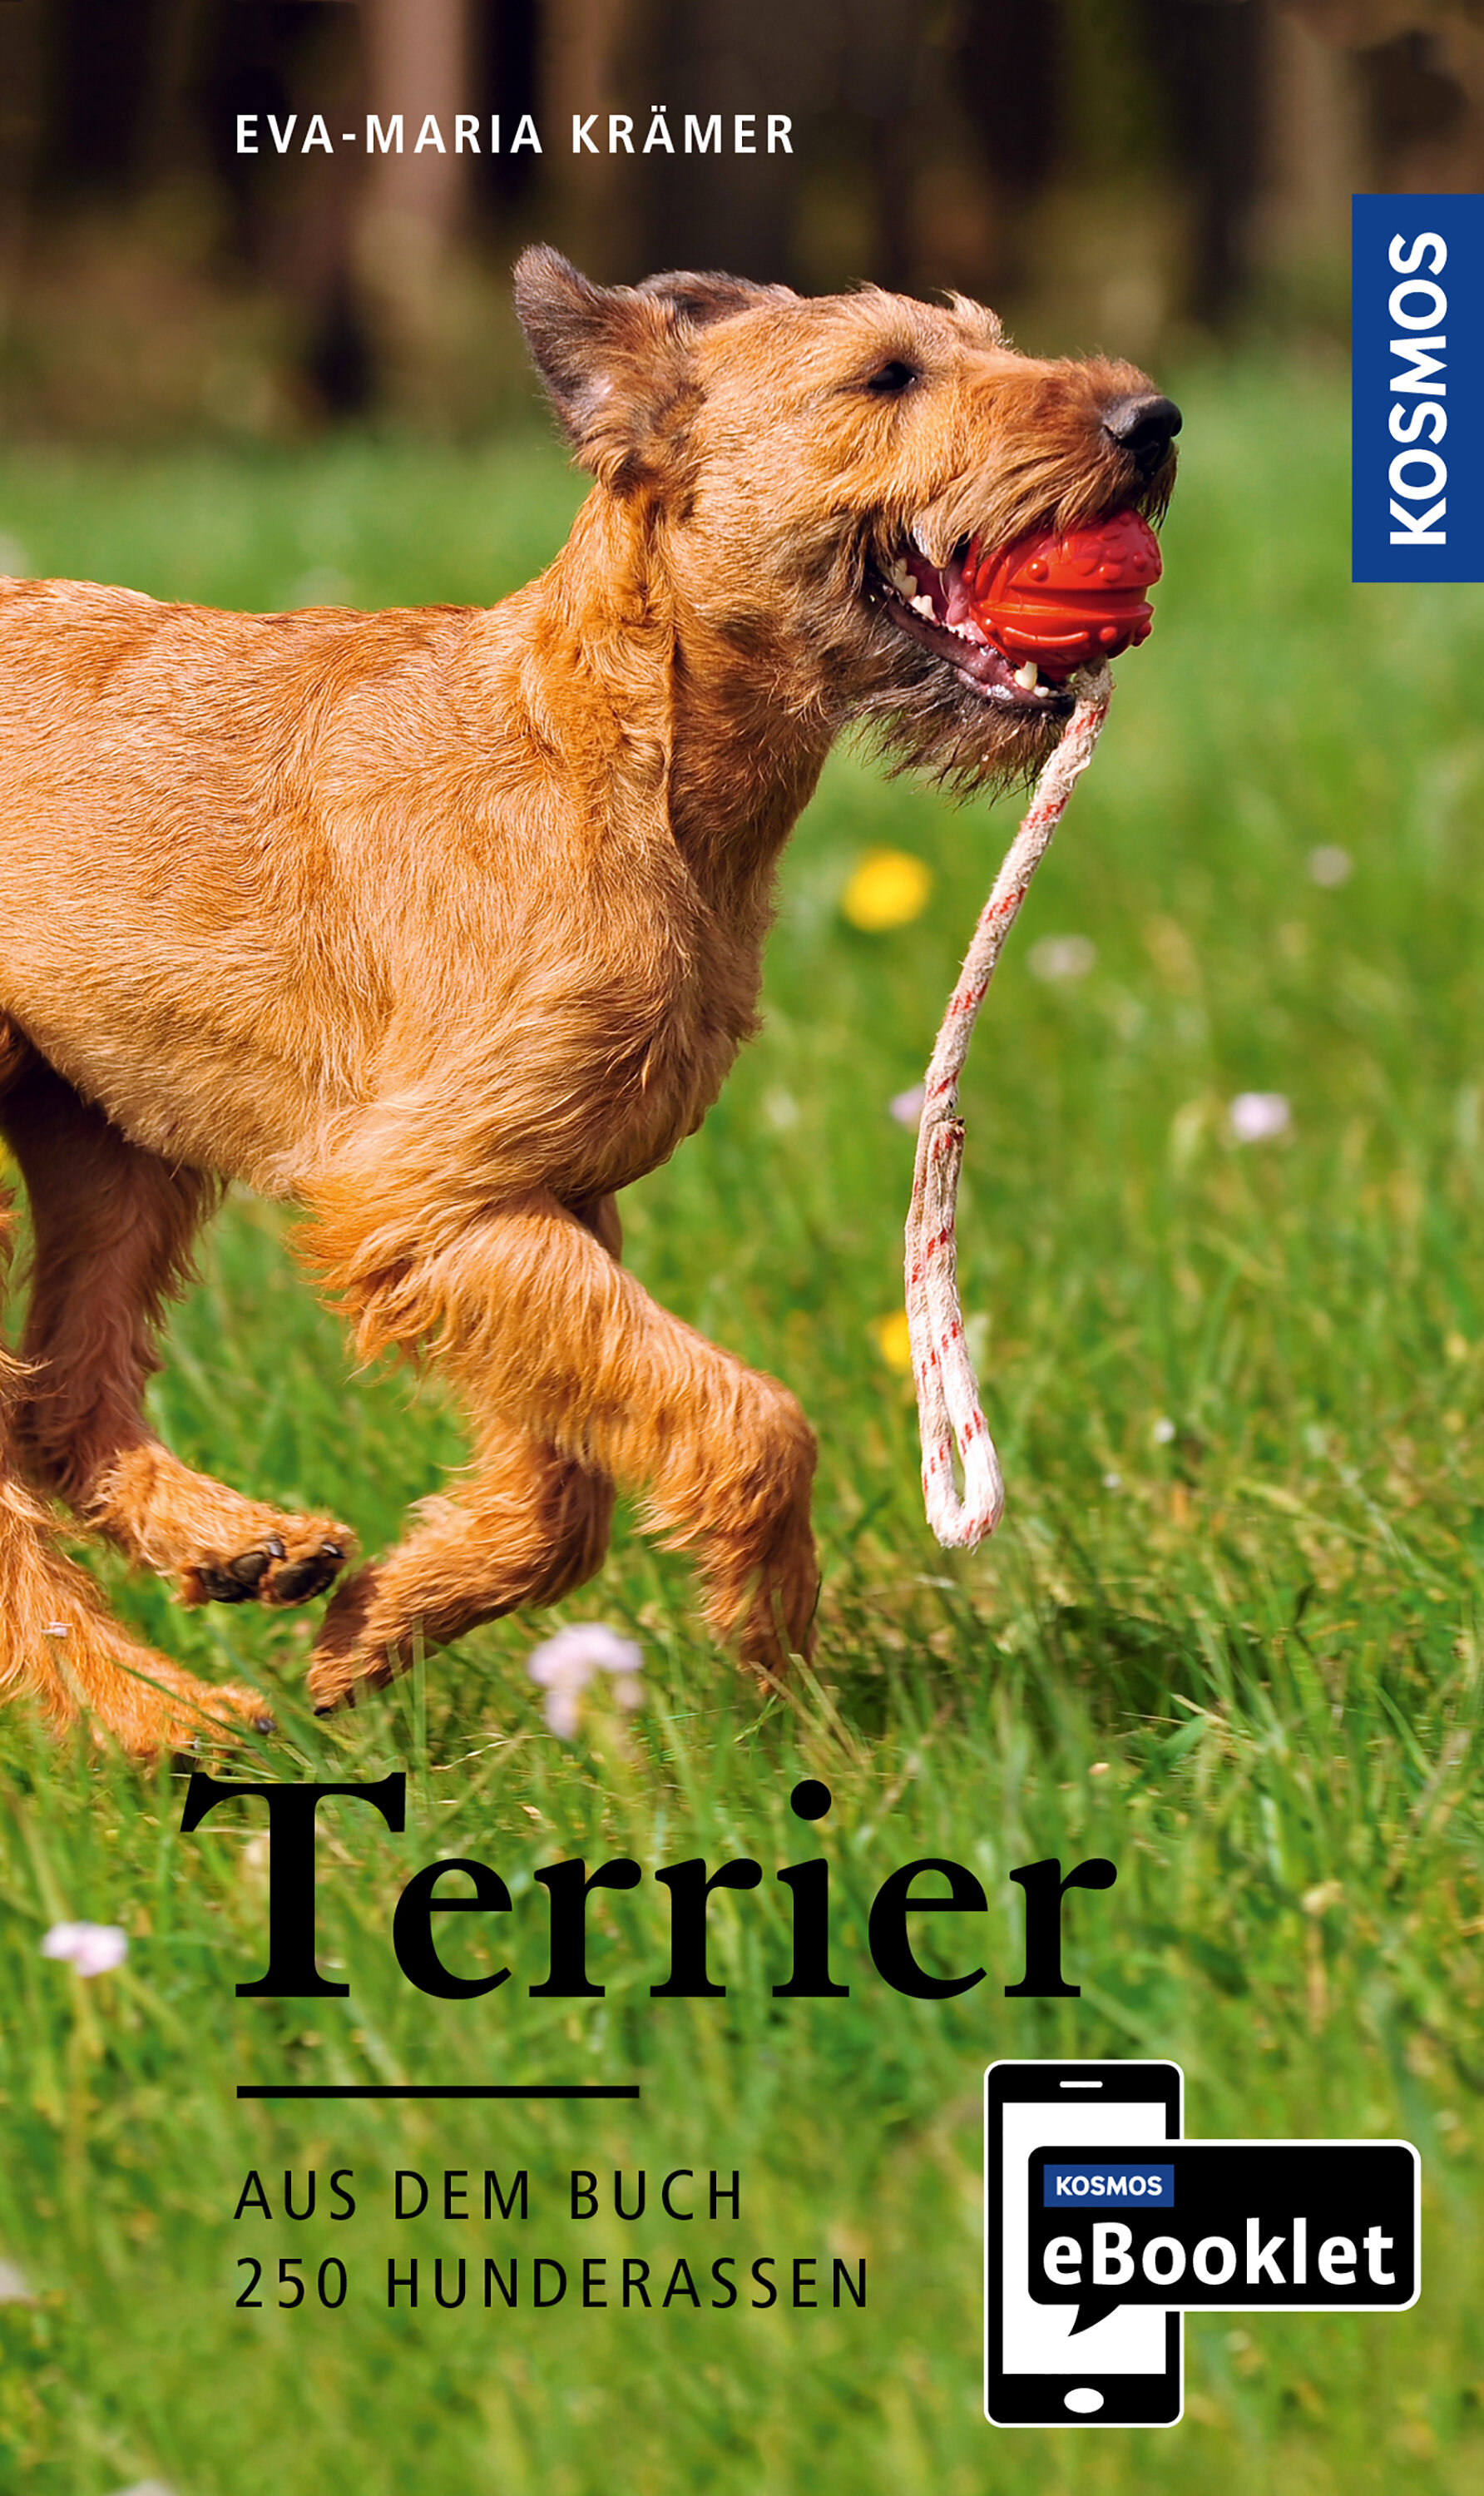 KOSMOS eBooklet: Terrier - Ursprung  Wesen  Haltung